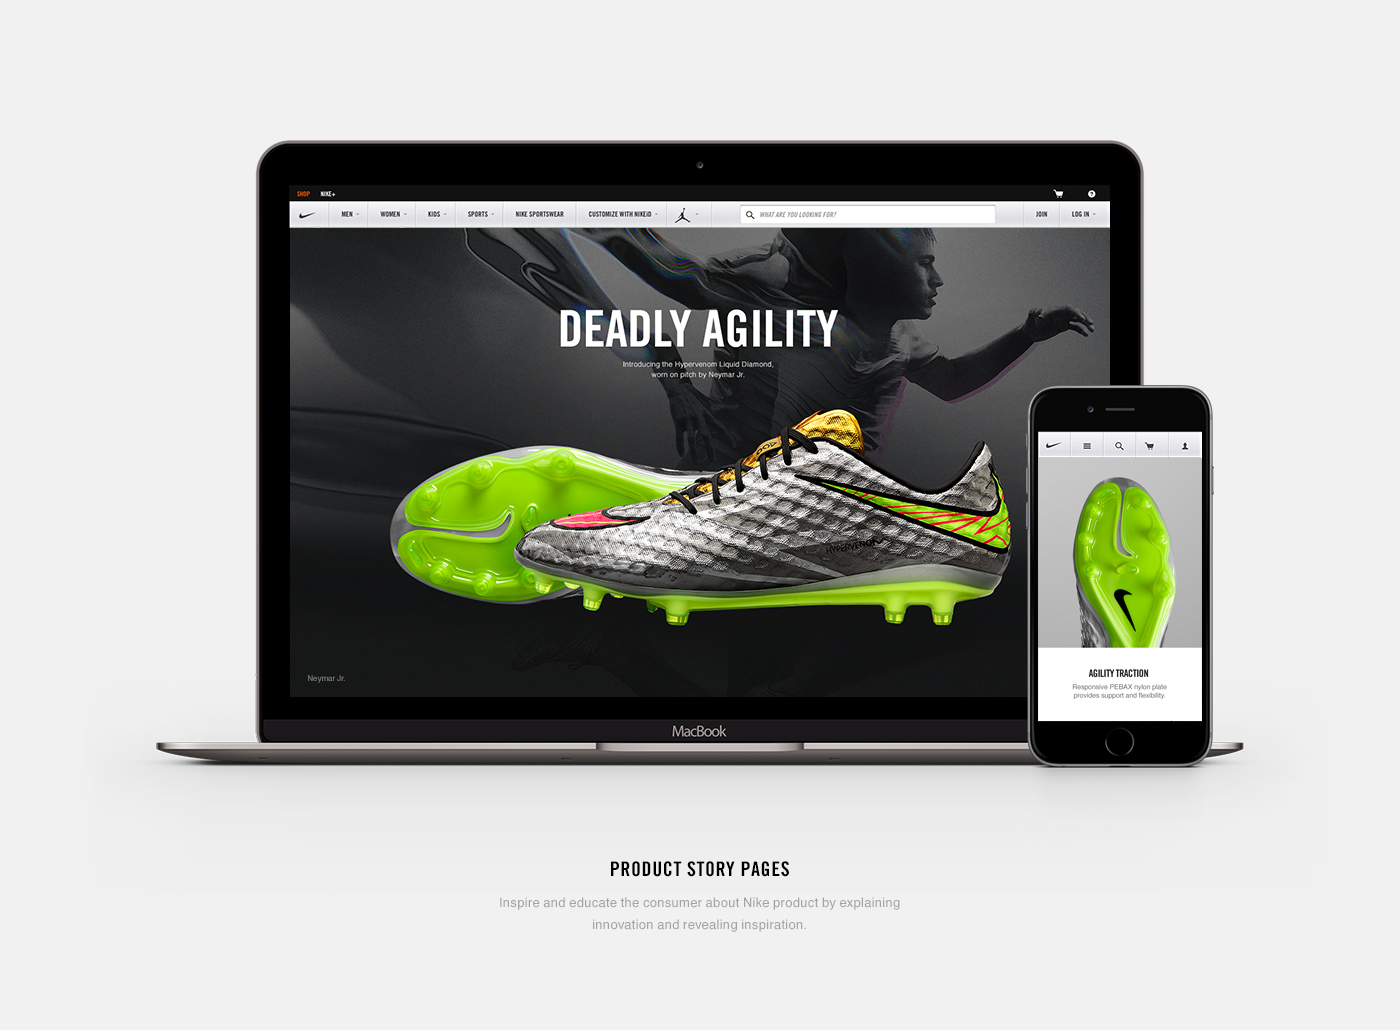 nike.com Nike editorial landing page athlete editorial product story page Product Detail Page